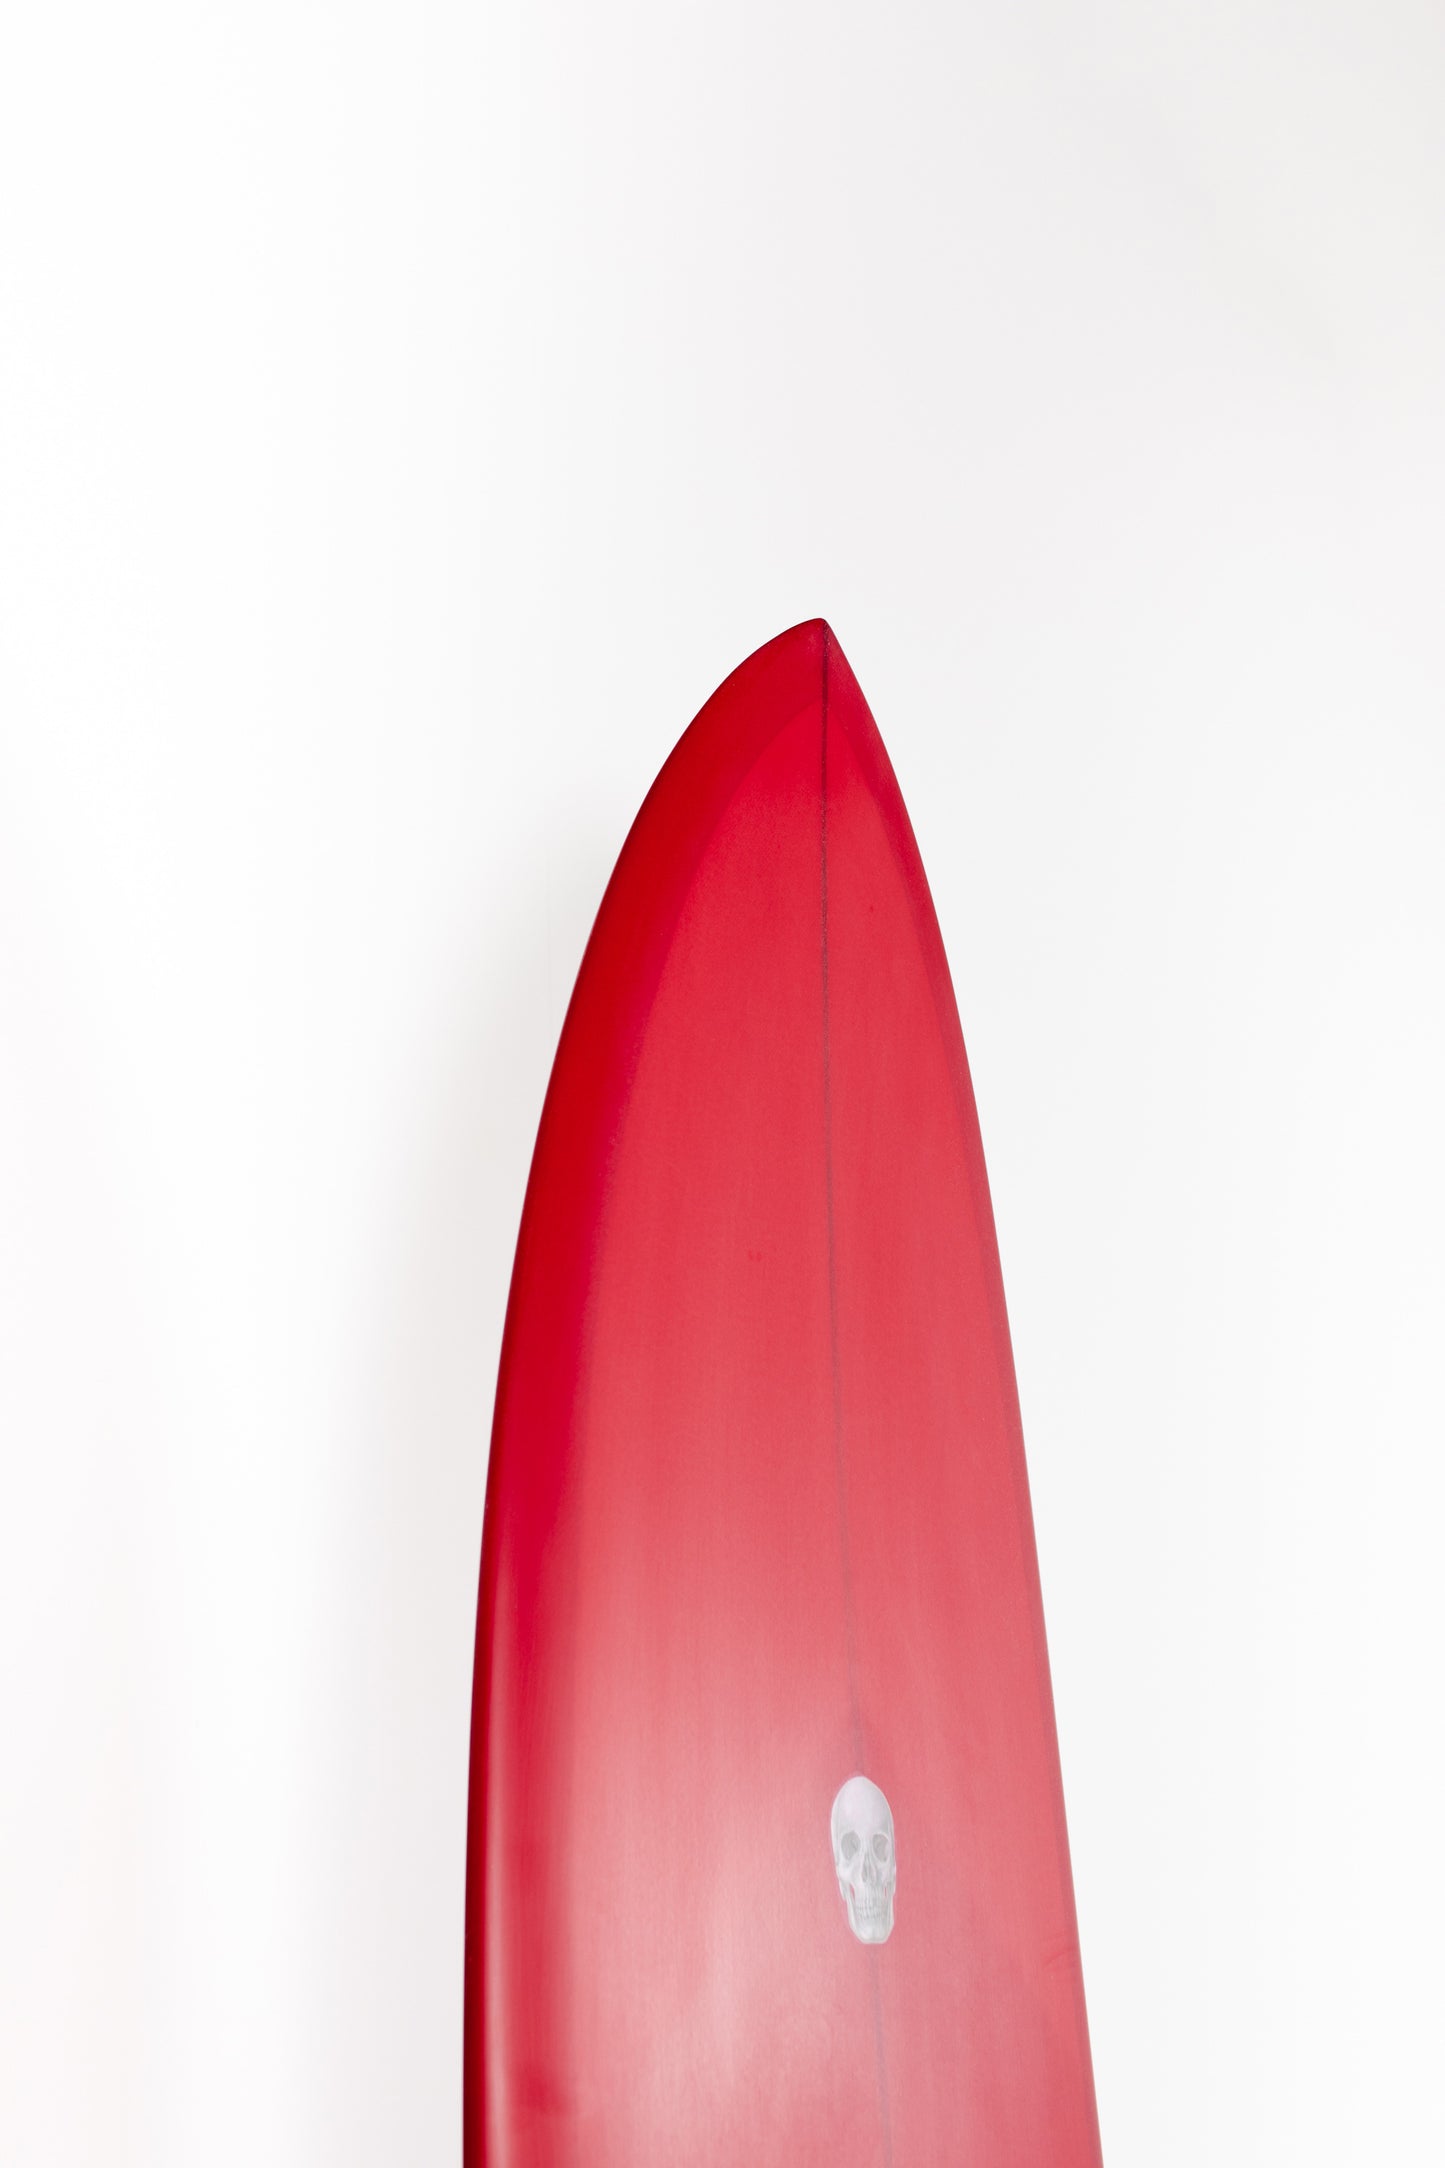 
                  
                    Pukas Surf Shop - Christenson Surfboards - FLAT TRACKER 2.0 - 7'4" x 21 1/4 x 2 7/8 - CX03151
                  
                